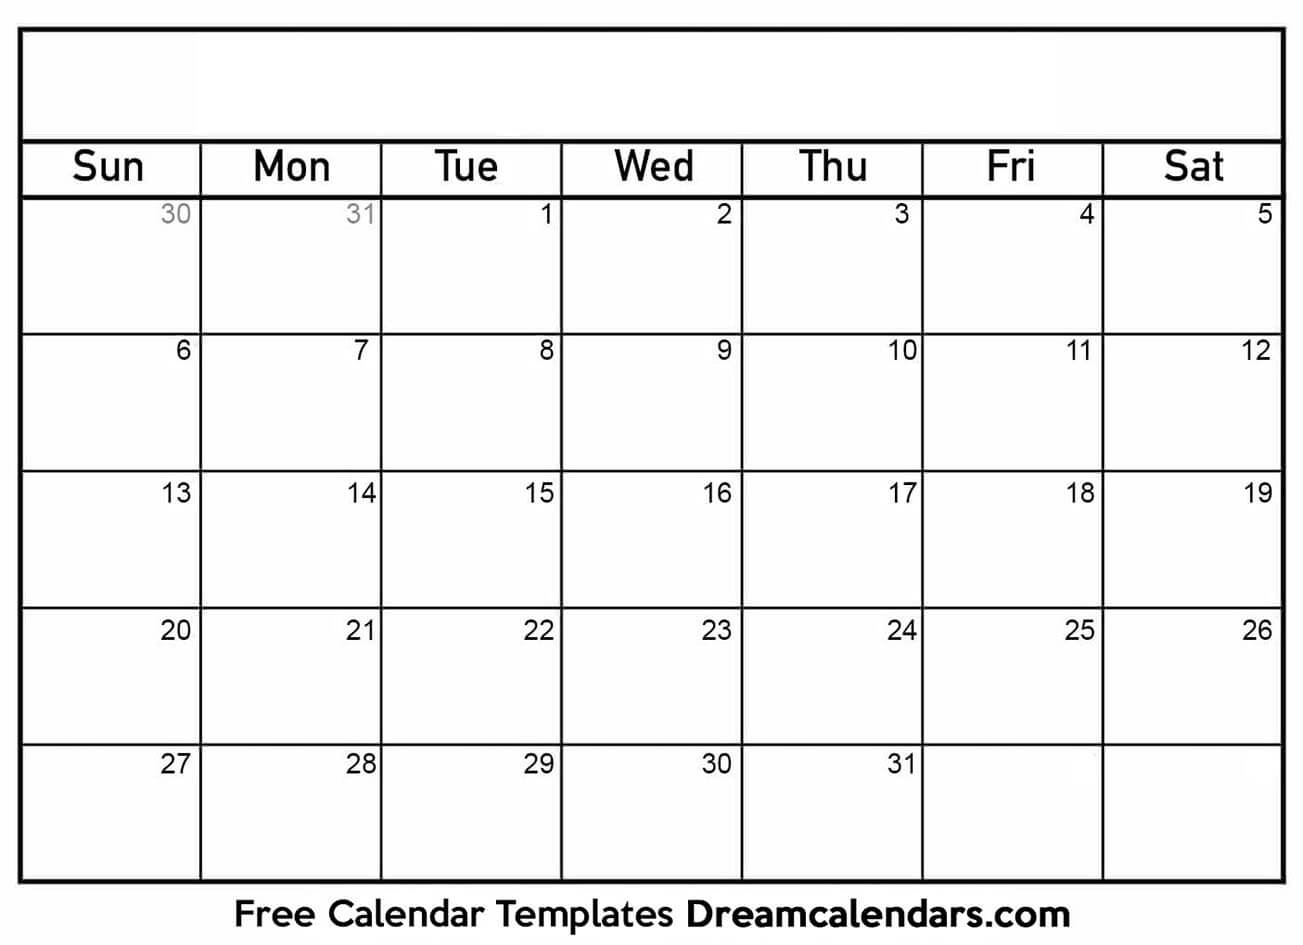 Printable Blank Calendar - Dream Calendars intended for Free Blank Calendar Templates To Print